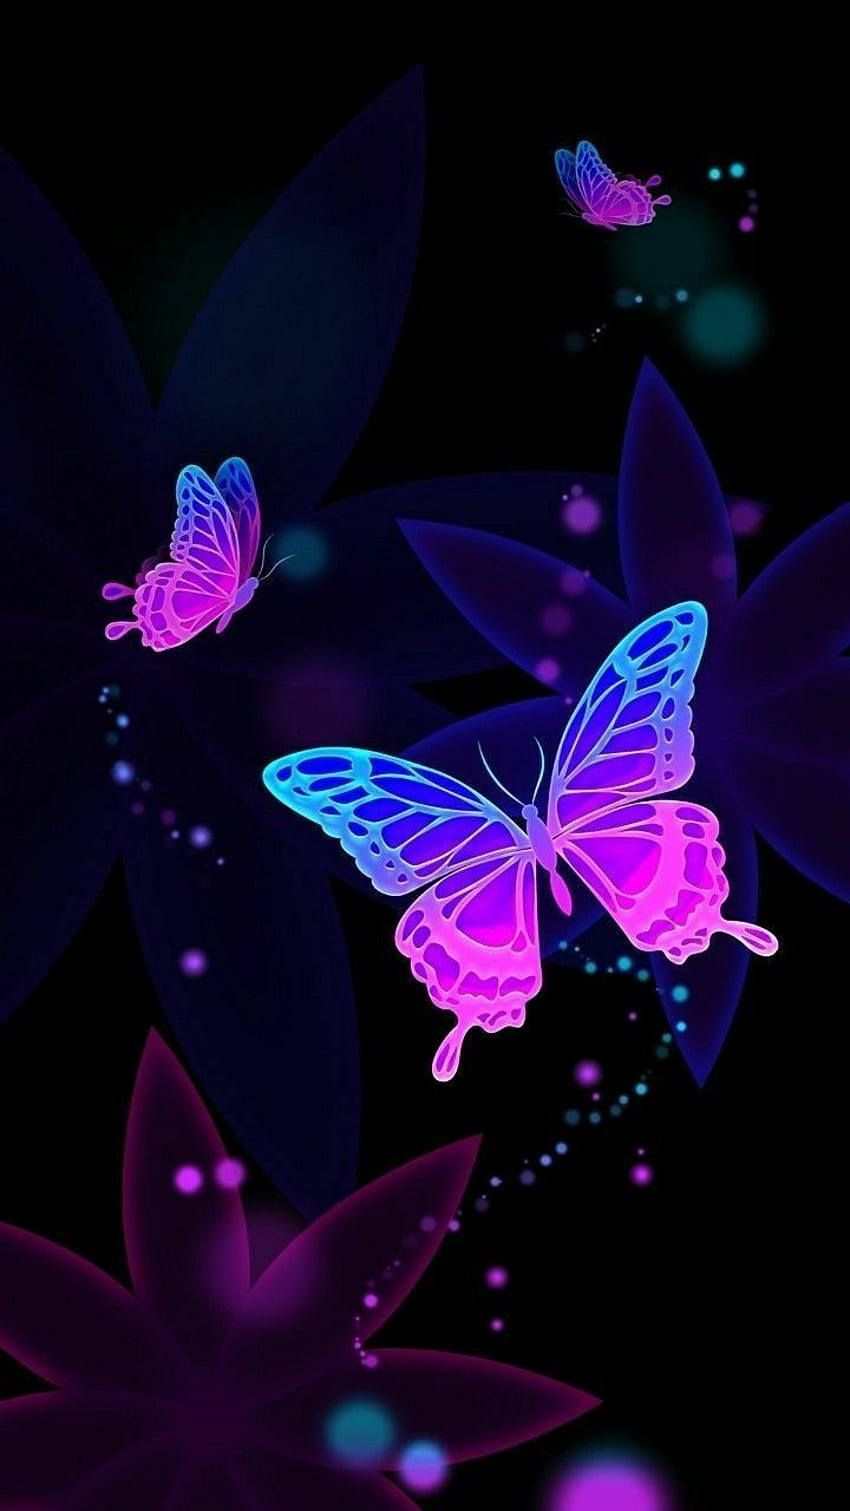 iPhone mariposa. Mariposa morada, iphone de mariposa, de mariposa, mariposas negras y moradas fondo de pantalla del teléfono